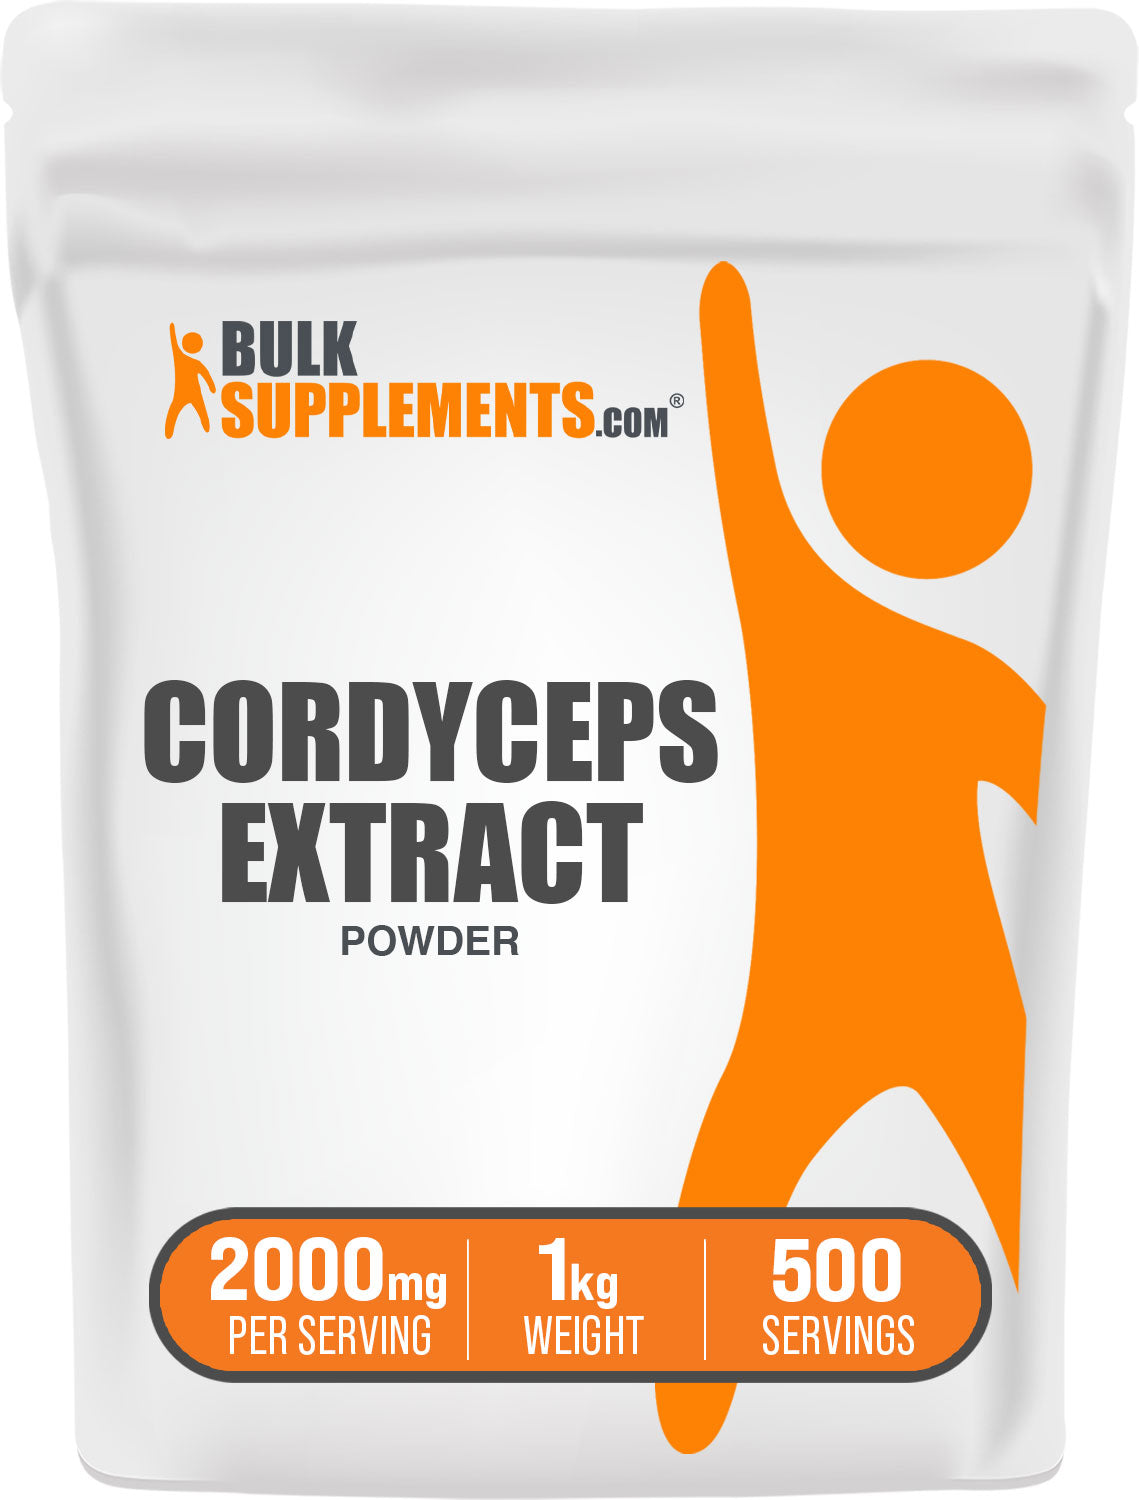 1kg Cordyceps Extract Powder